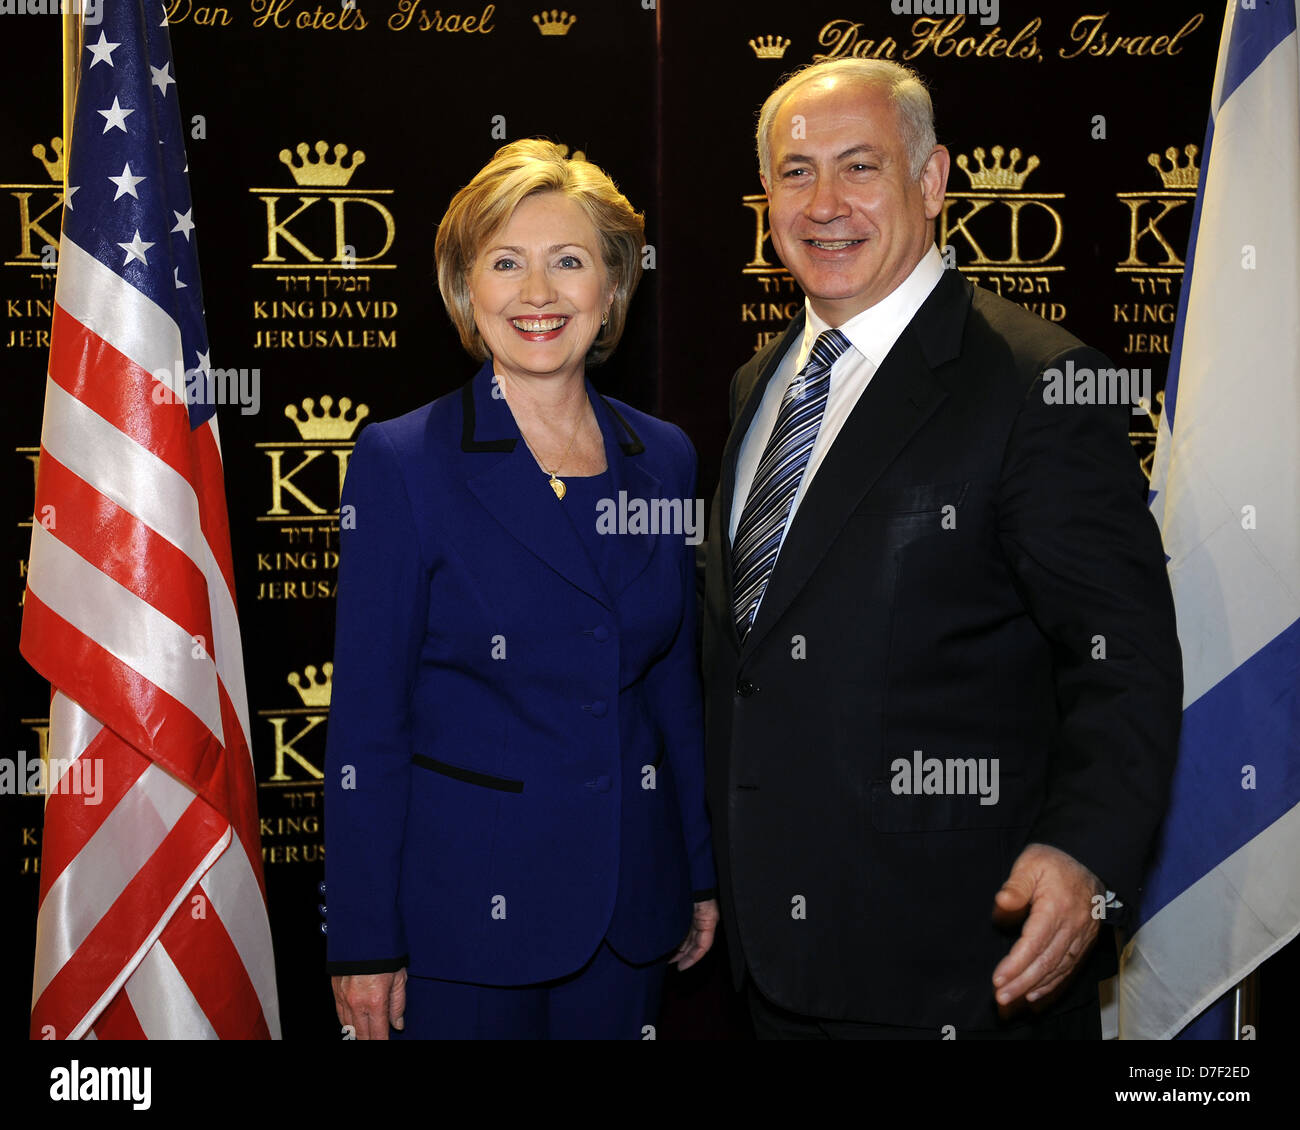 US Secretary of State Hillary Rodham Clinton meets with Israeli Prime Minister Designate Benyamin Netanyahu at the King David Hotel March 3, 2009 in Jerusalem. Stock Photo